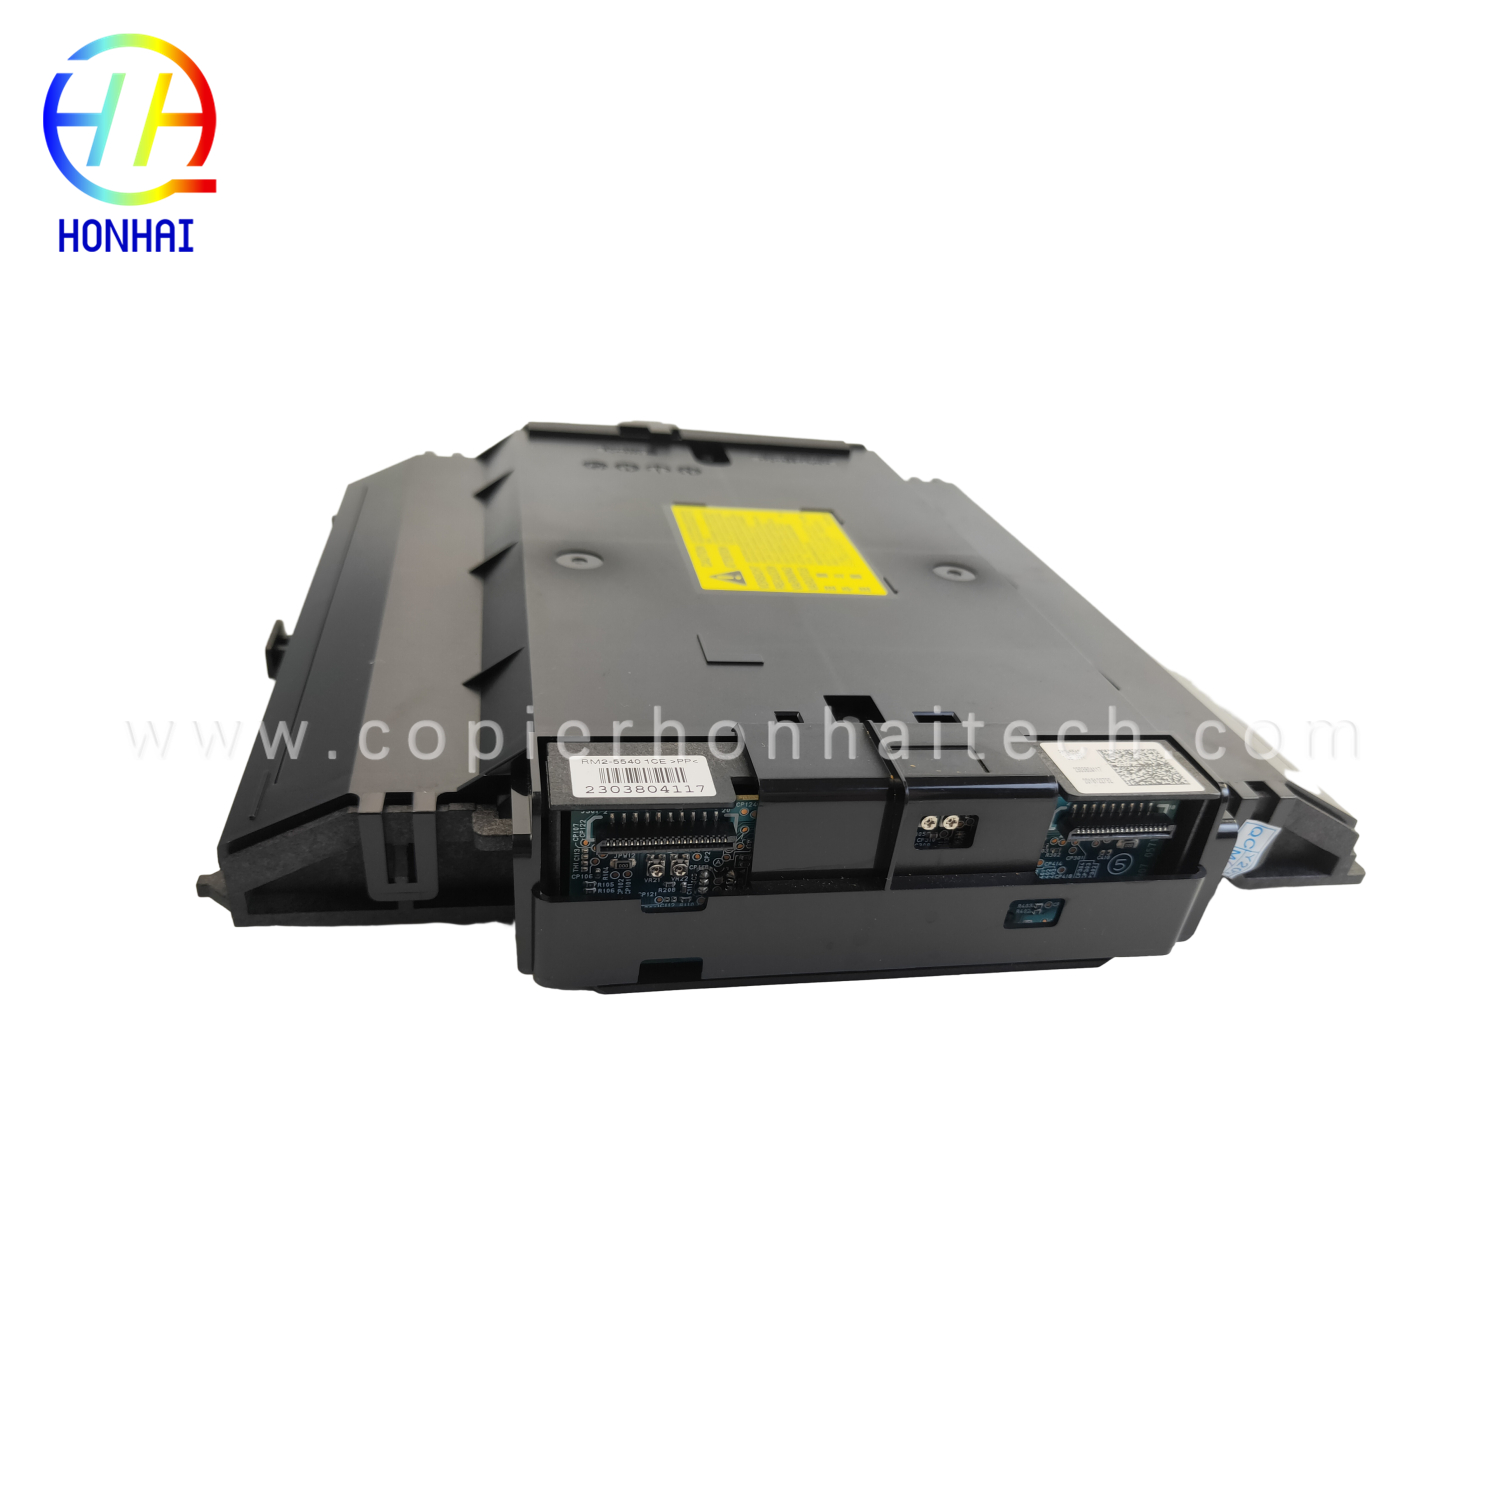 https://www.copierhonhaitech.com/origen-laser-scanner-for-hp-m277-product/